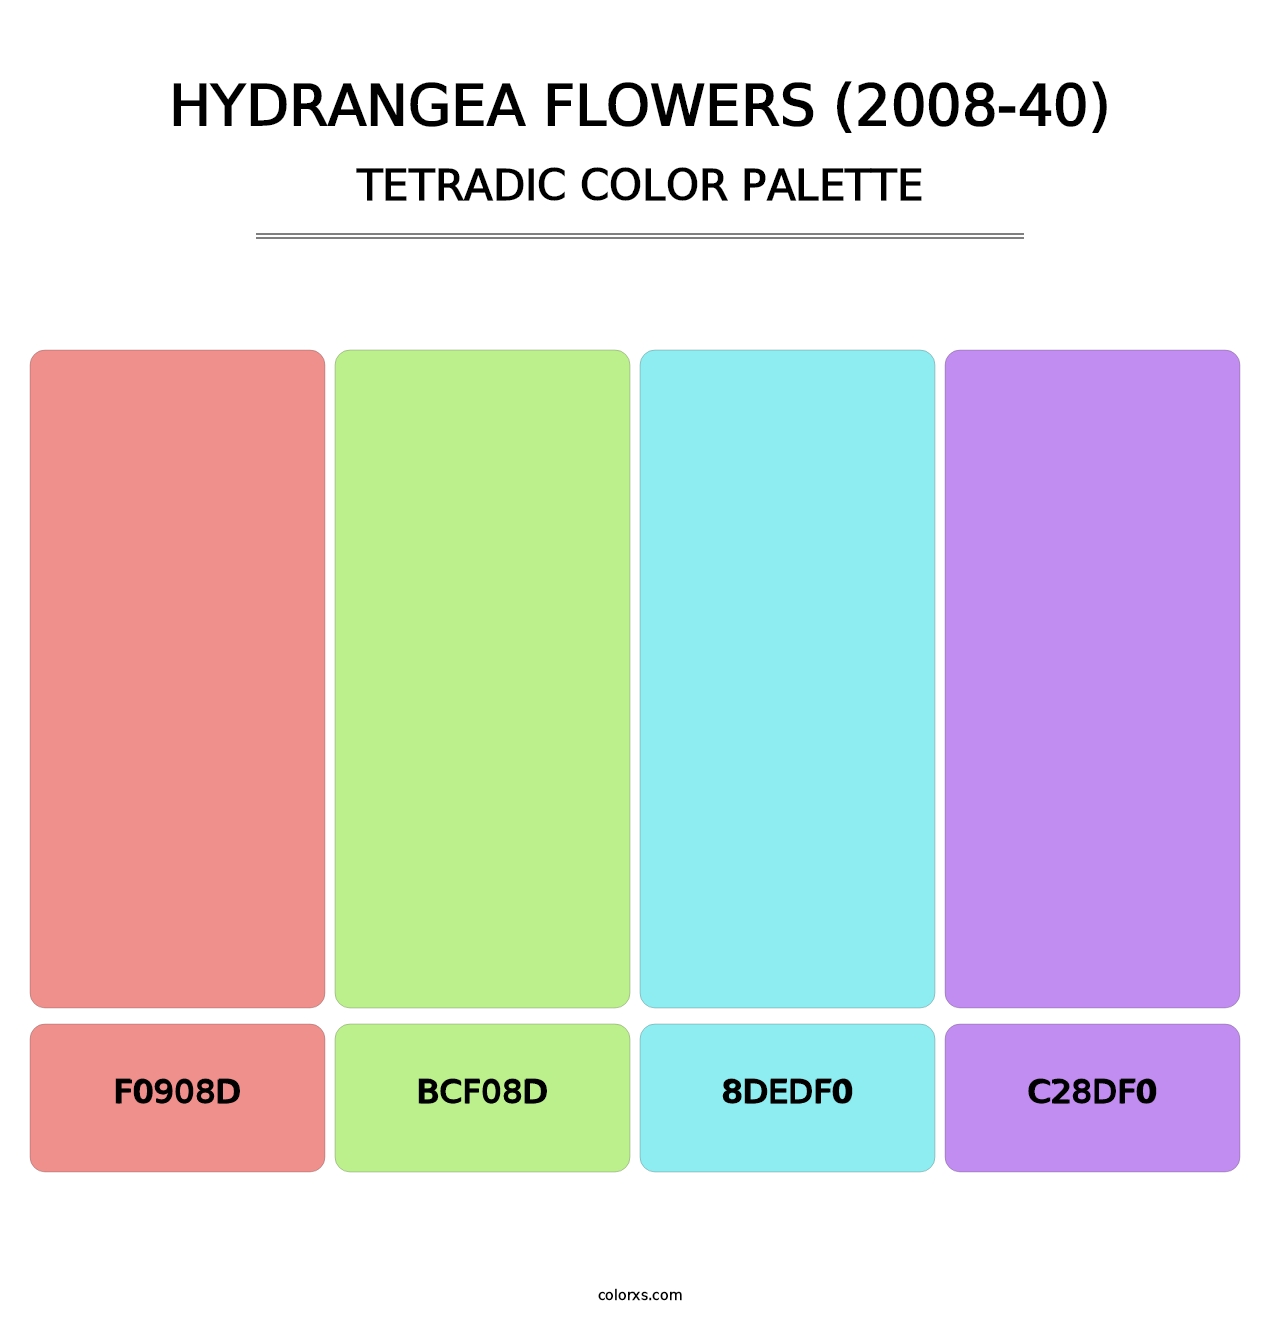 Hydrangea Flowers (2008-40) - Tetradic Color Palette